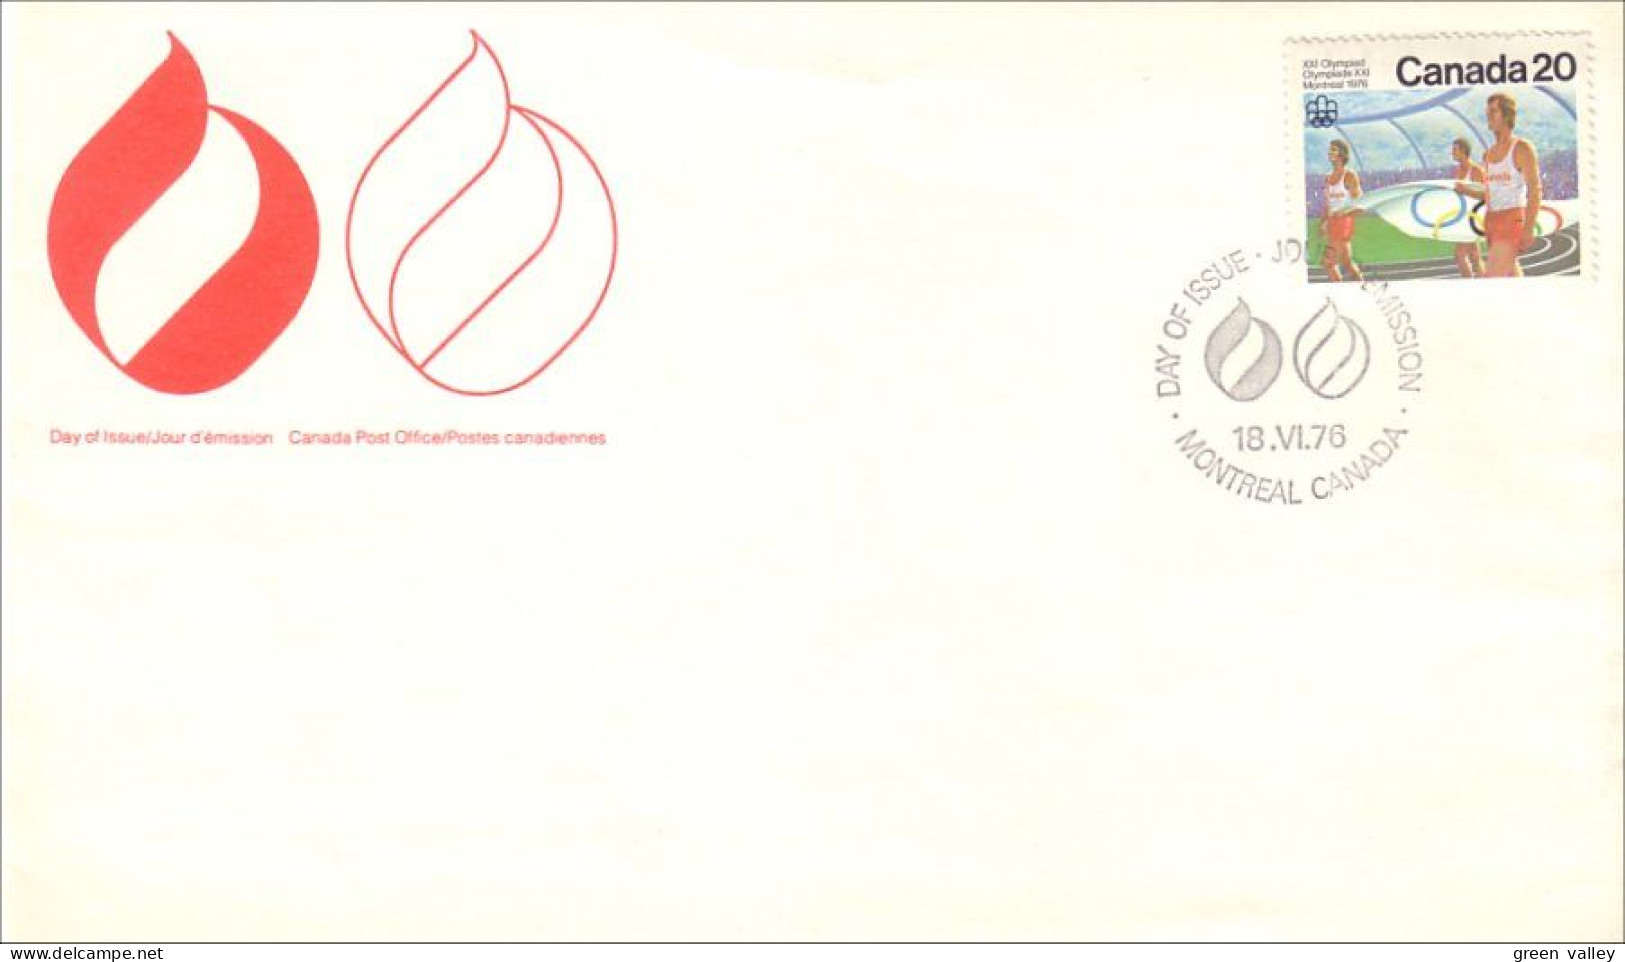 Canada Montreal Olympics FDC Cover ( A72 148) - Verano 1976: Montréal